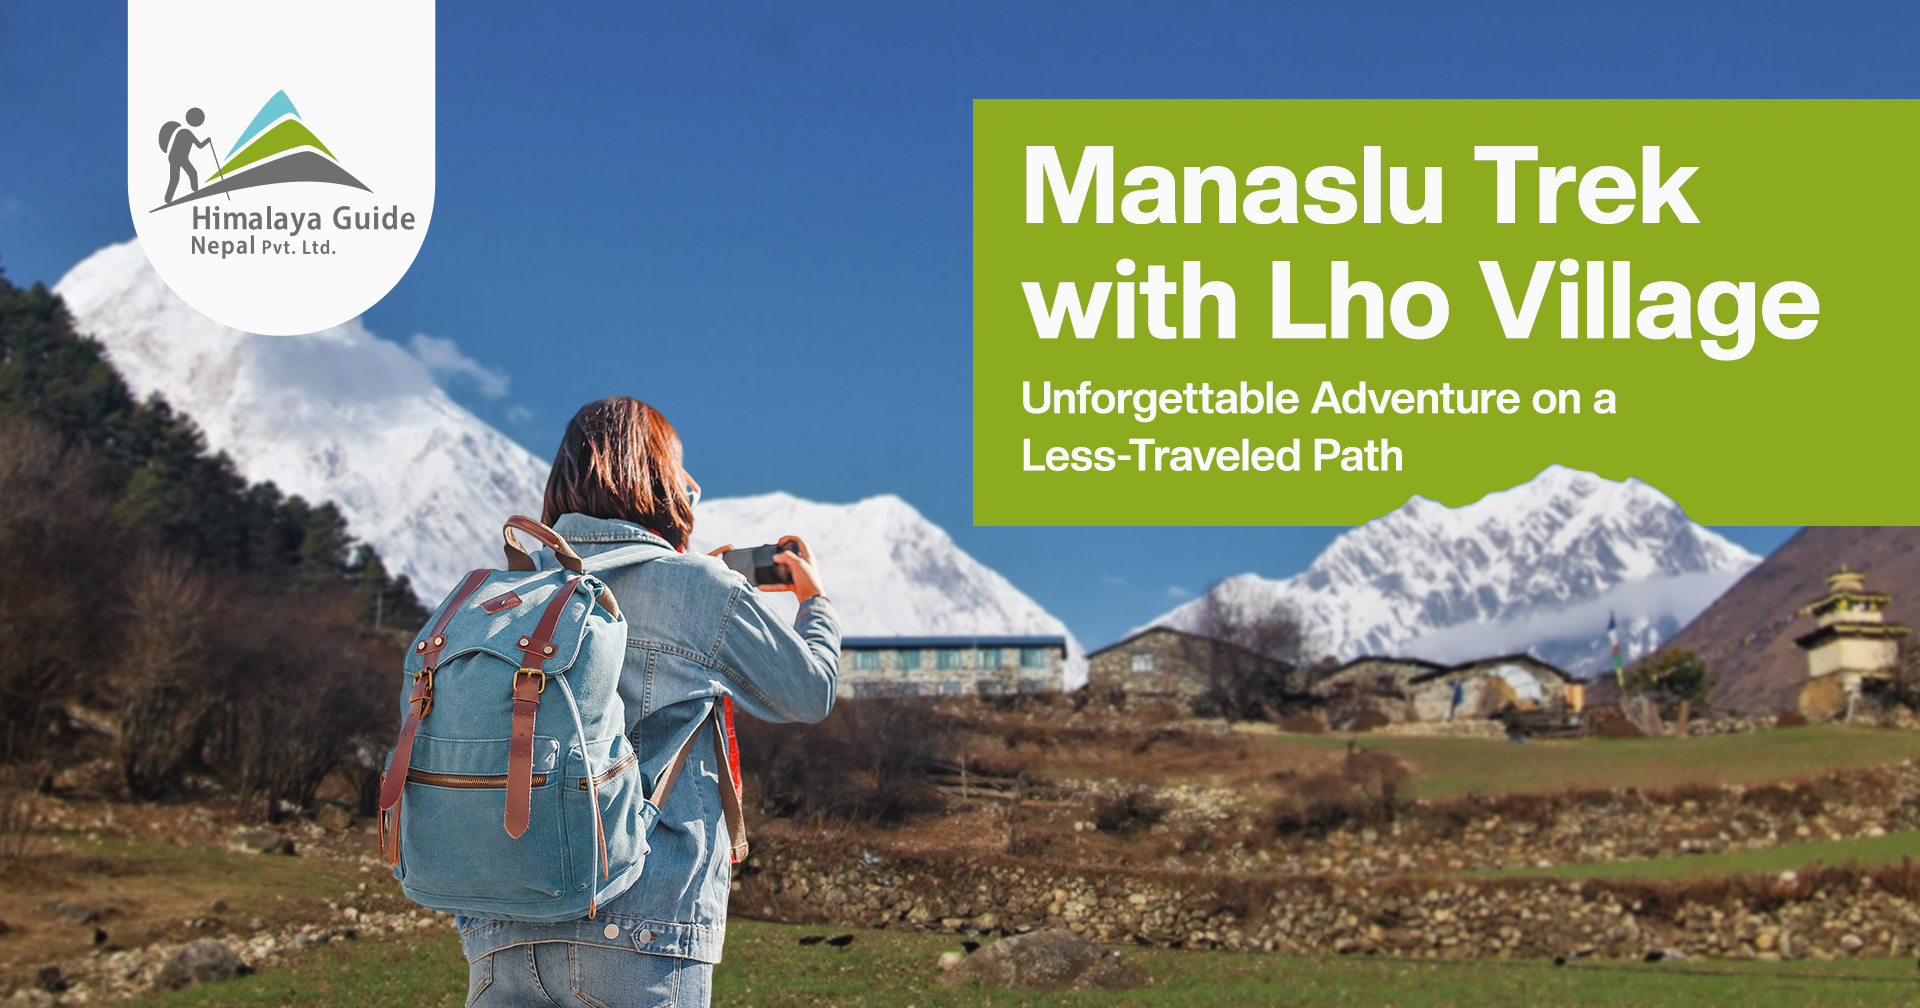 Manaslu Trek with Lho Village: Unforgettable Adventure on a Less-Traveled Path